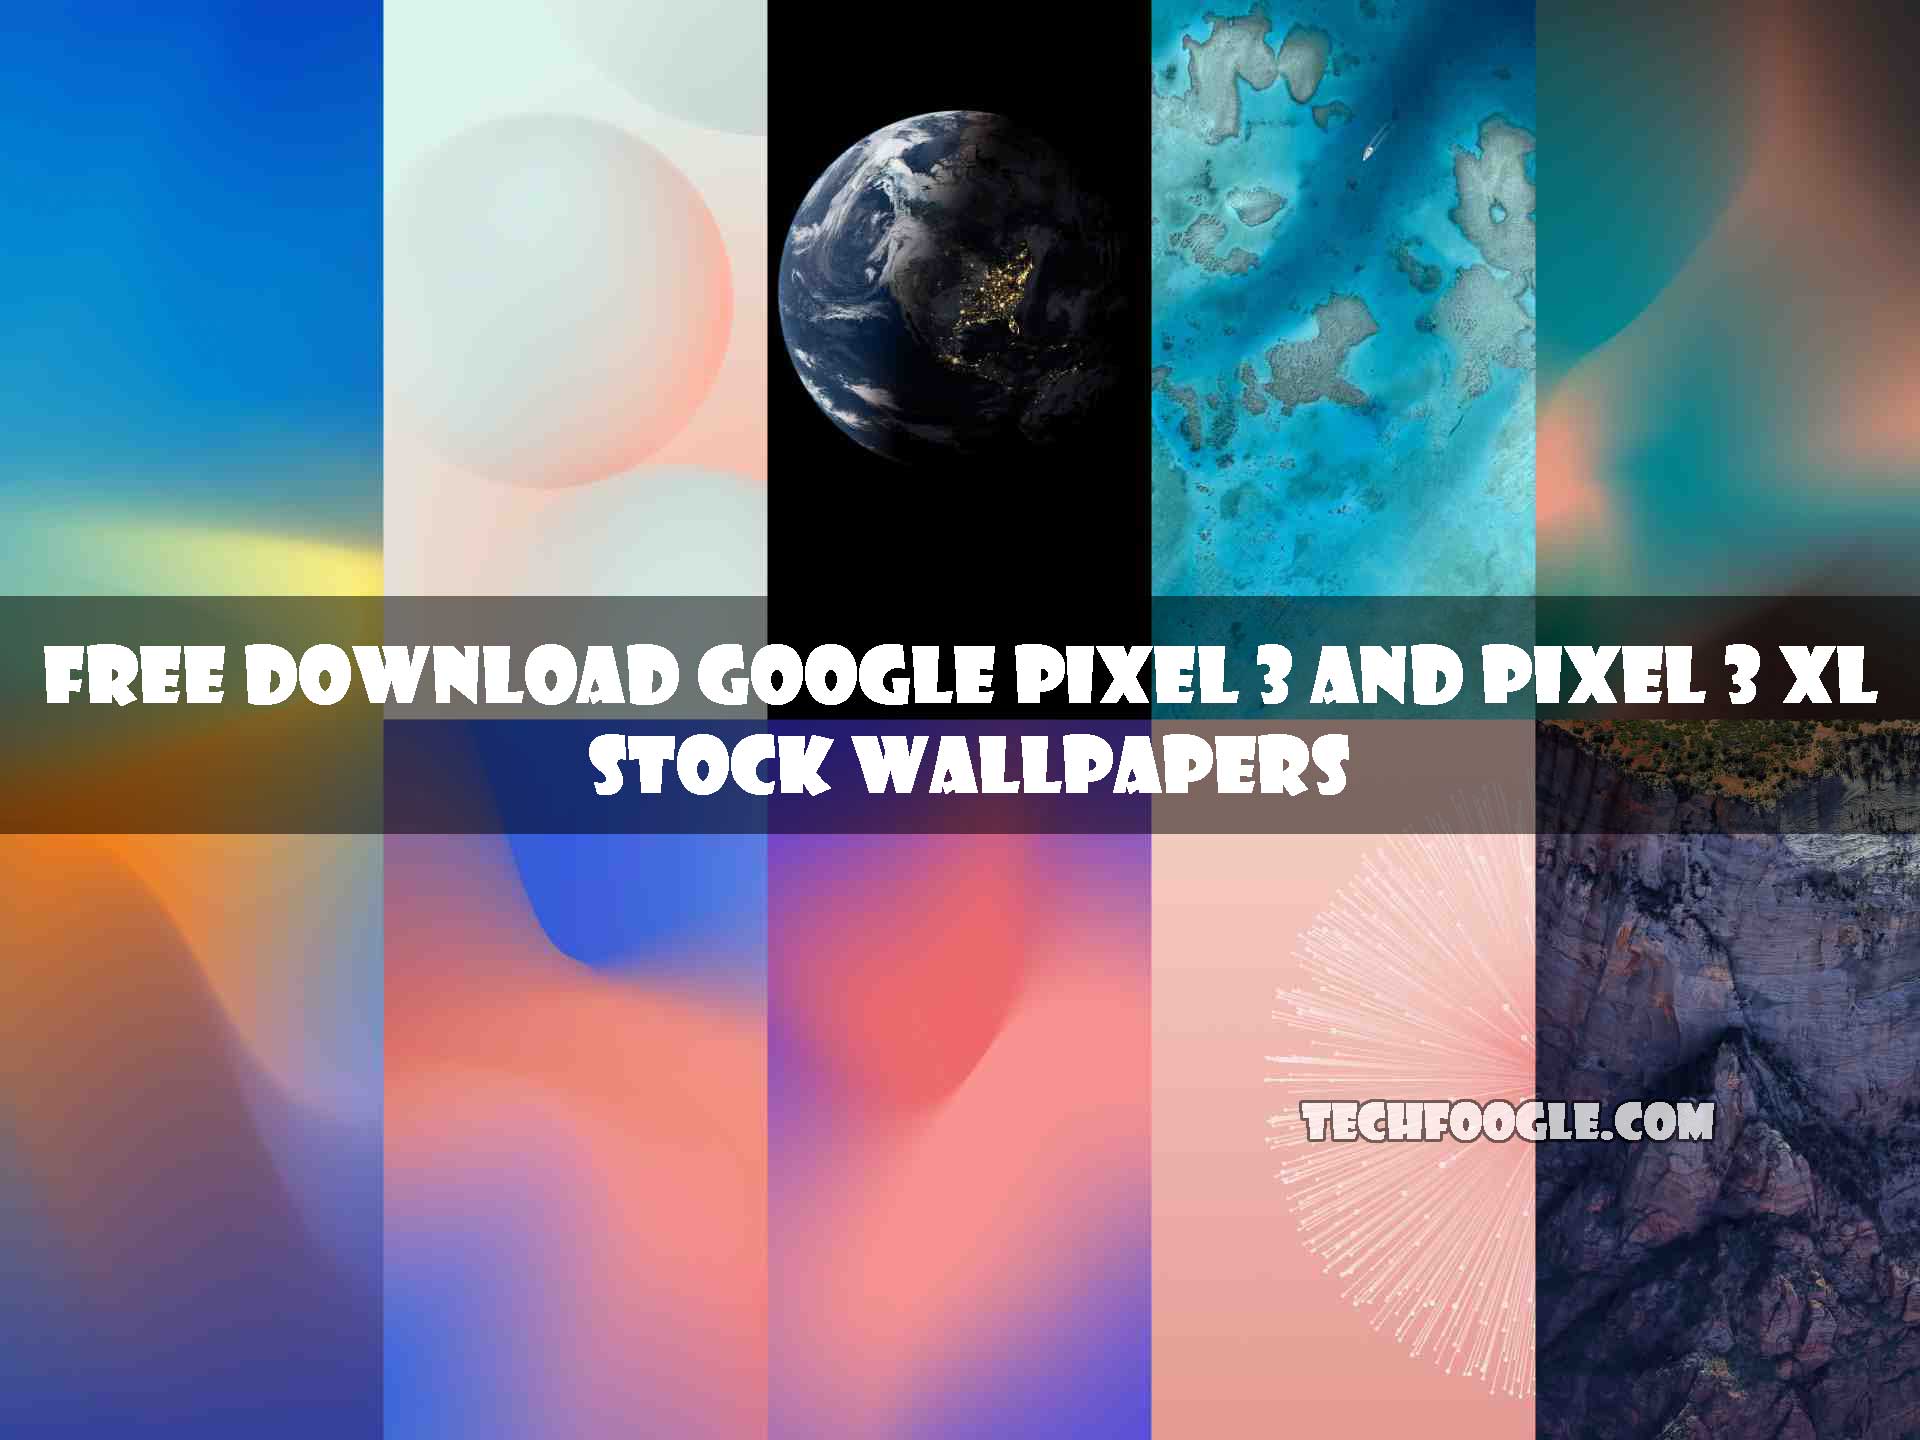 Pixel 3 XL Stock Wallpapers